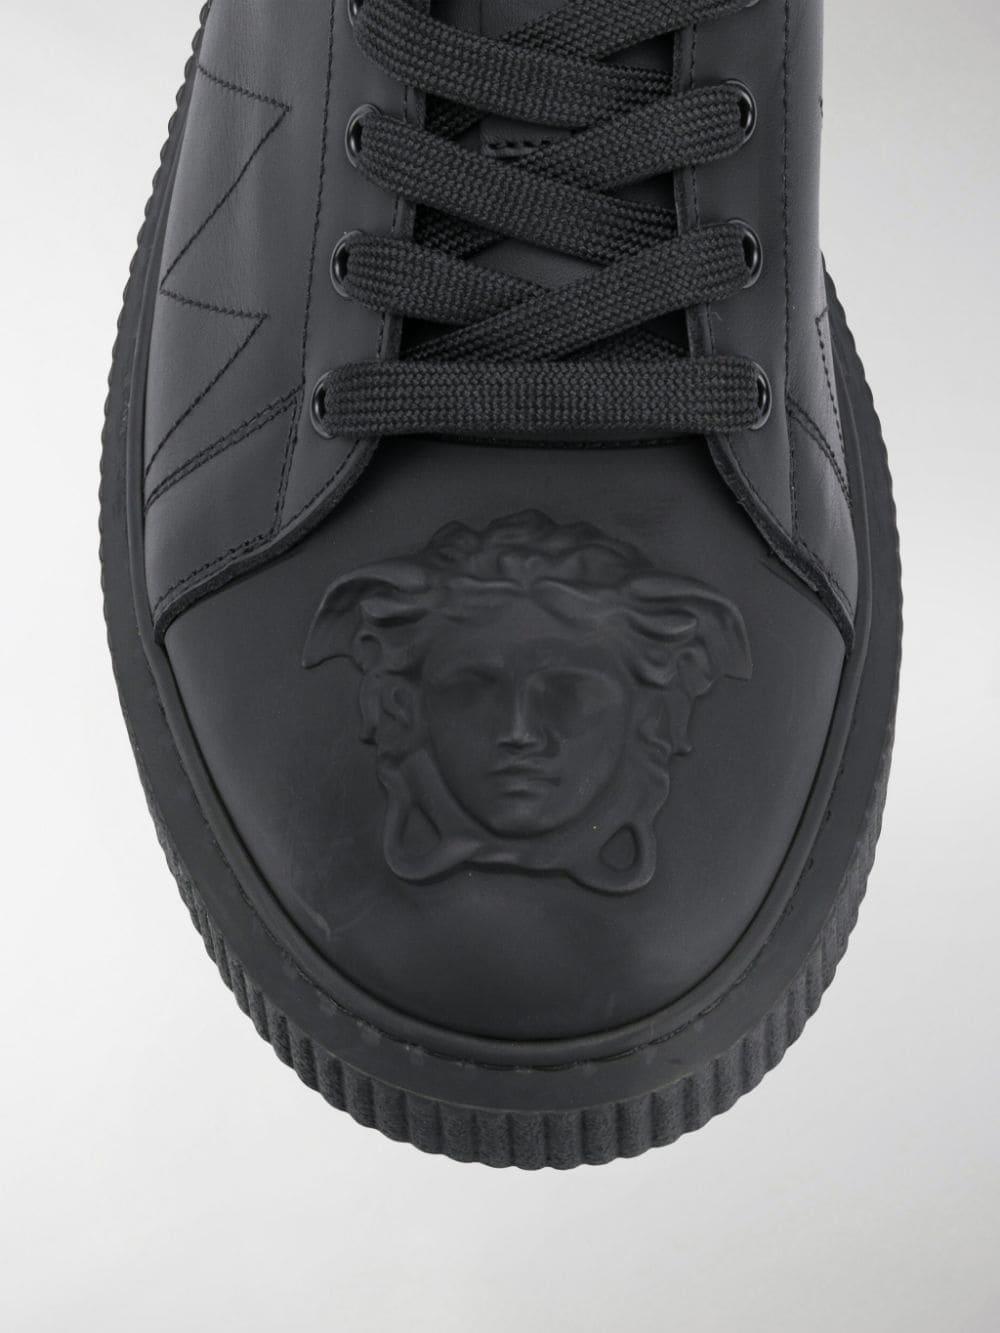 Versace Leather Medusa Head Logo Sneakers in Black for Men - Lyst